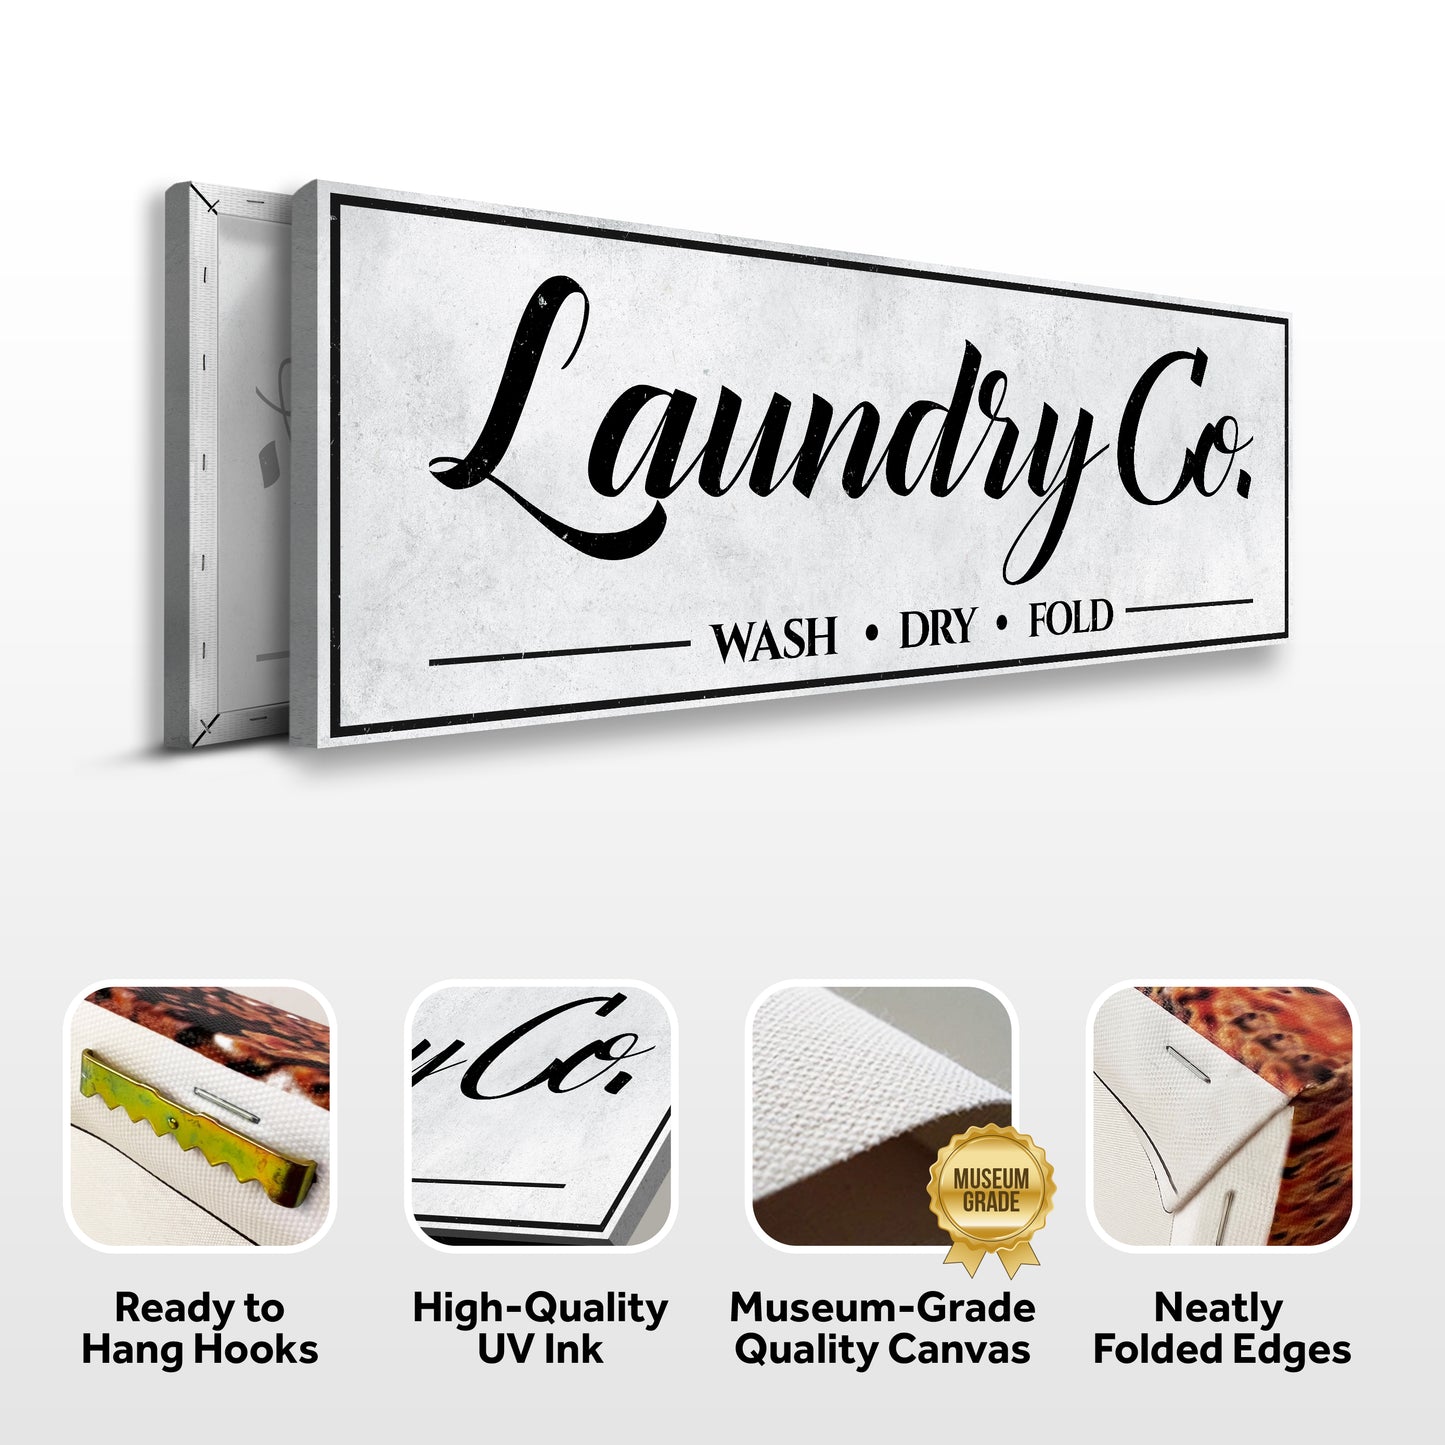 Laundry Co Wash Dry Fold Sign